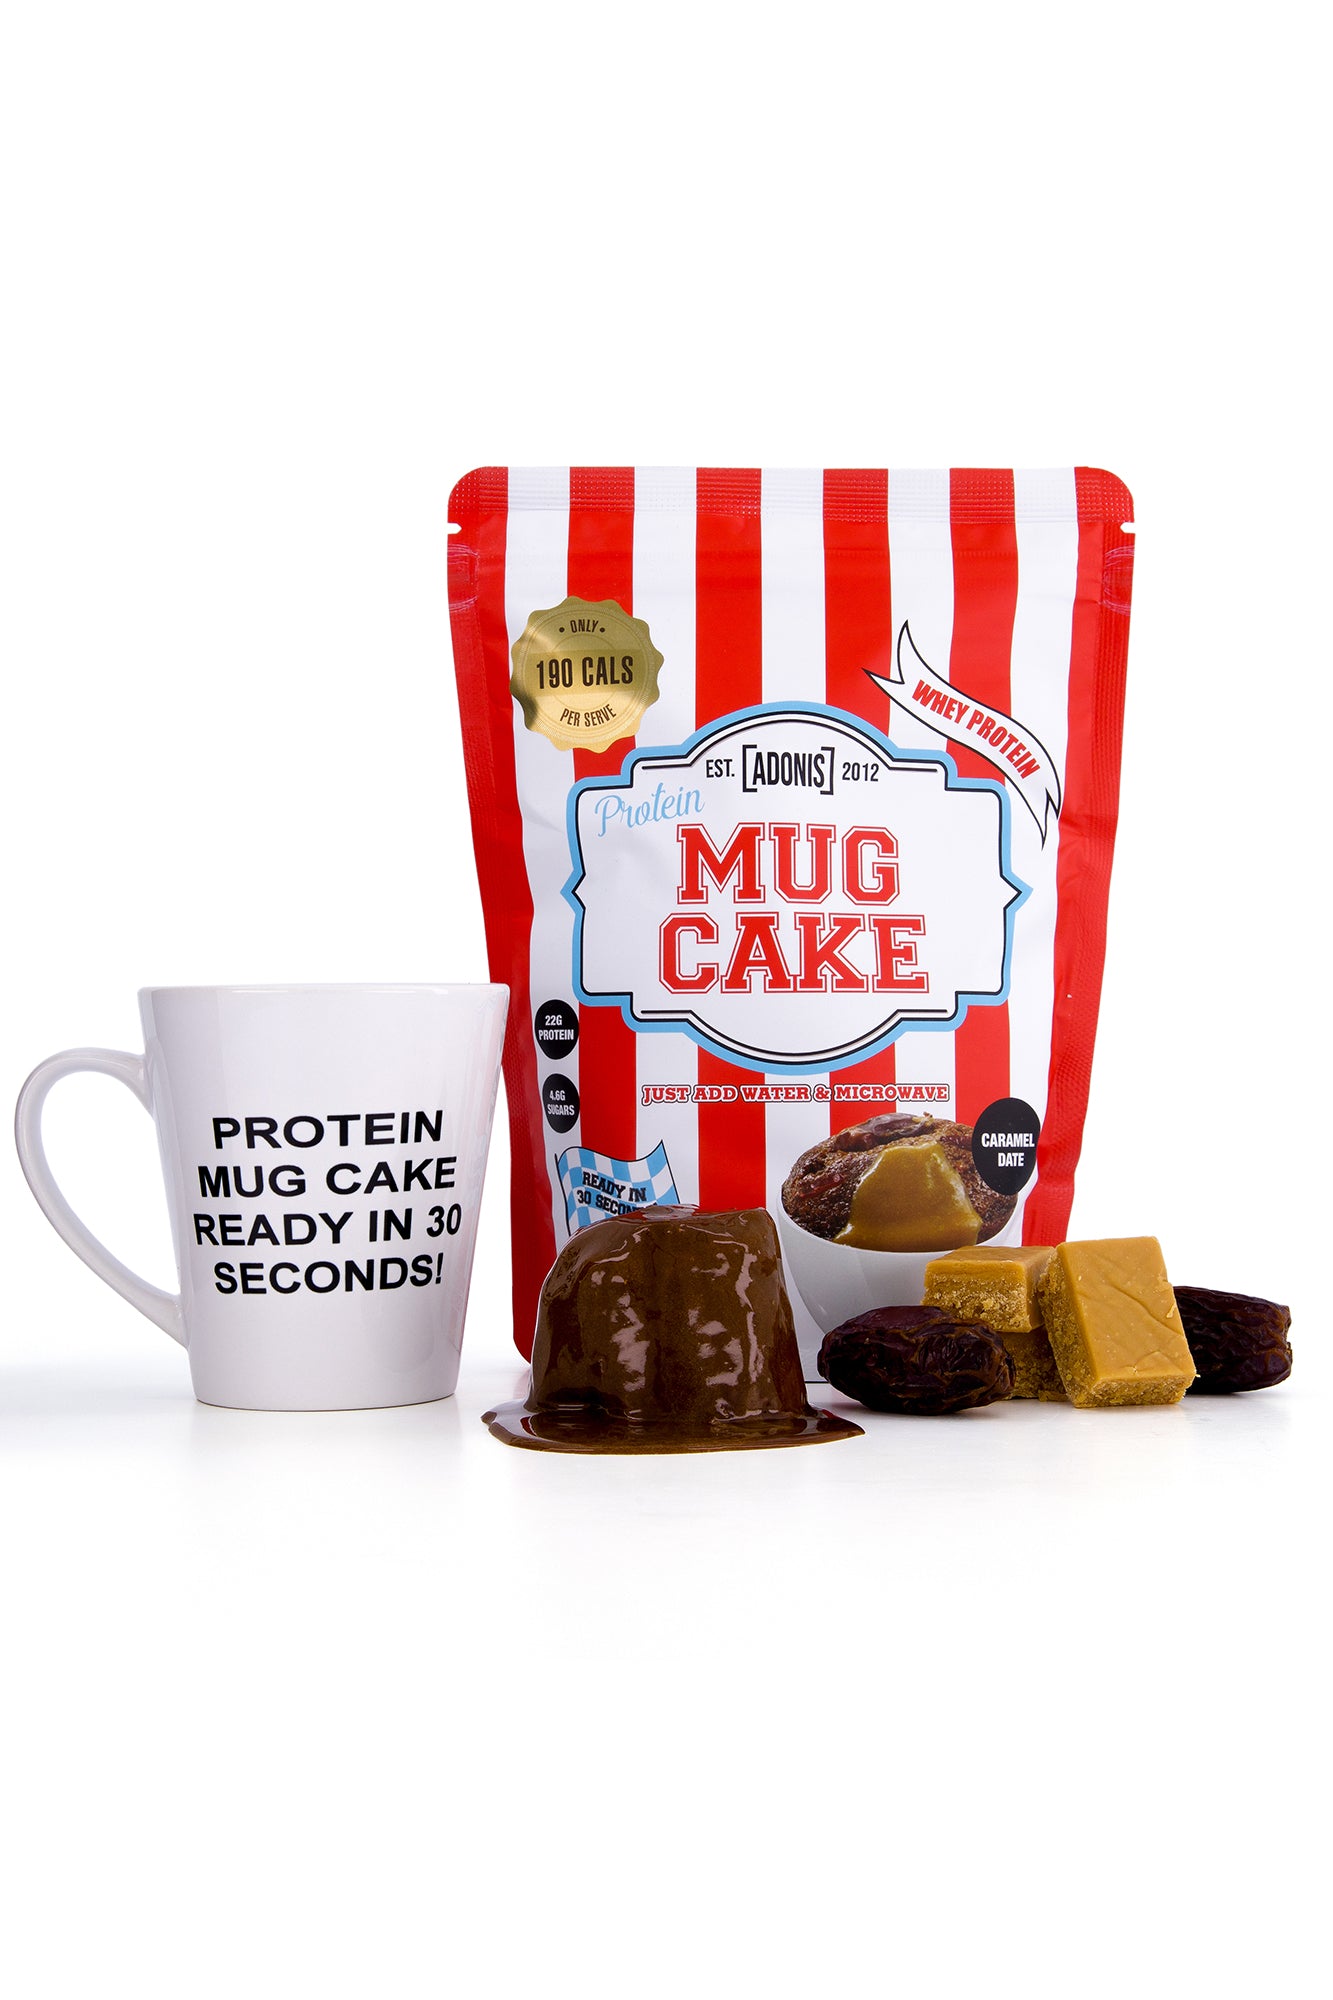 PROTEIN MUG CAKE (Whey Protein) – Caramel Date 400g